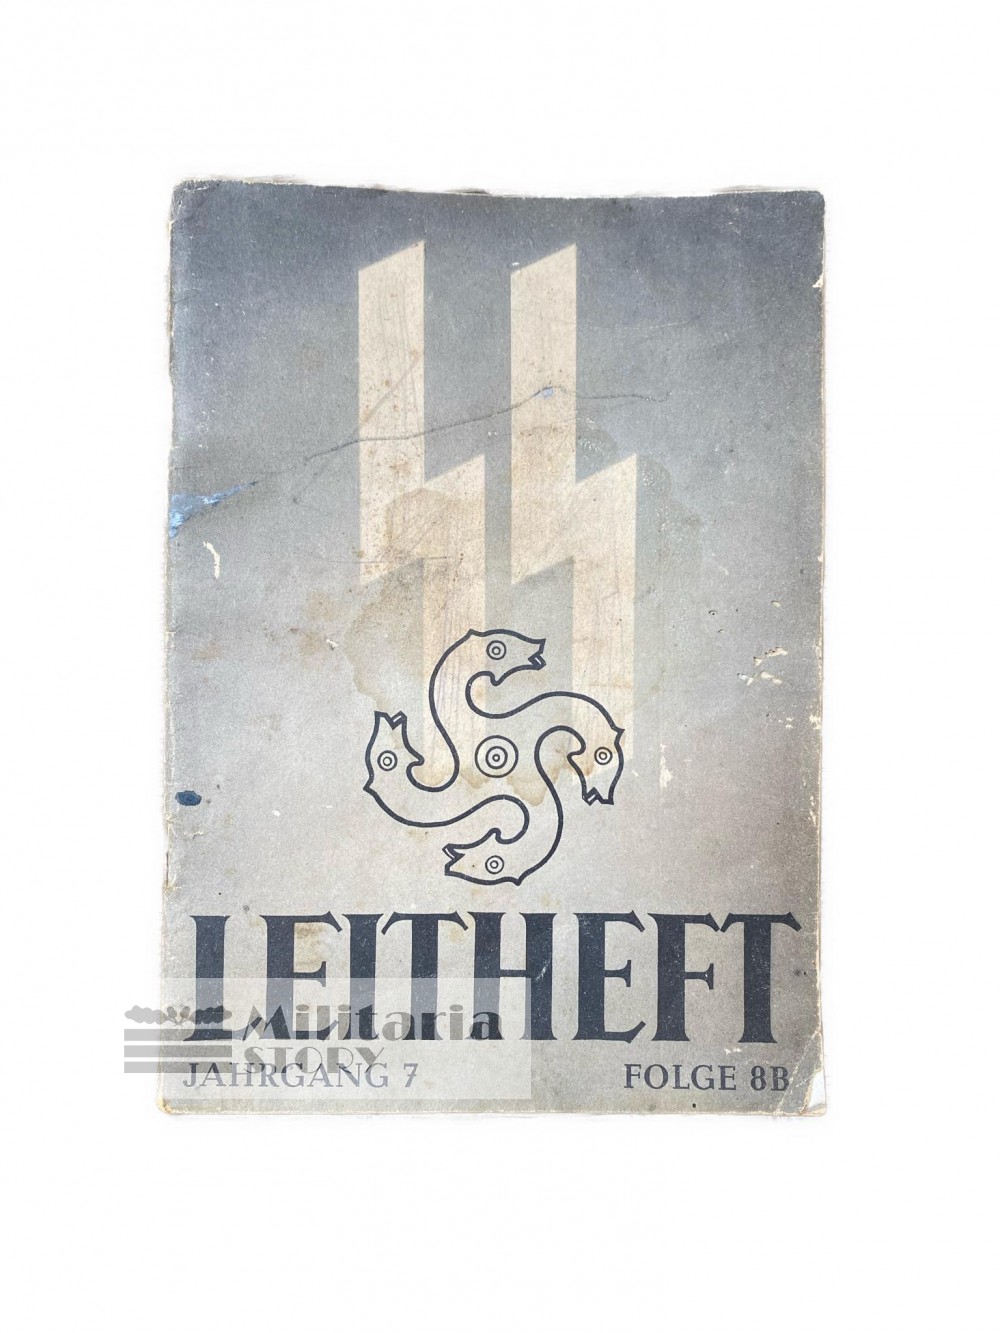 SS Leitheft Magazine